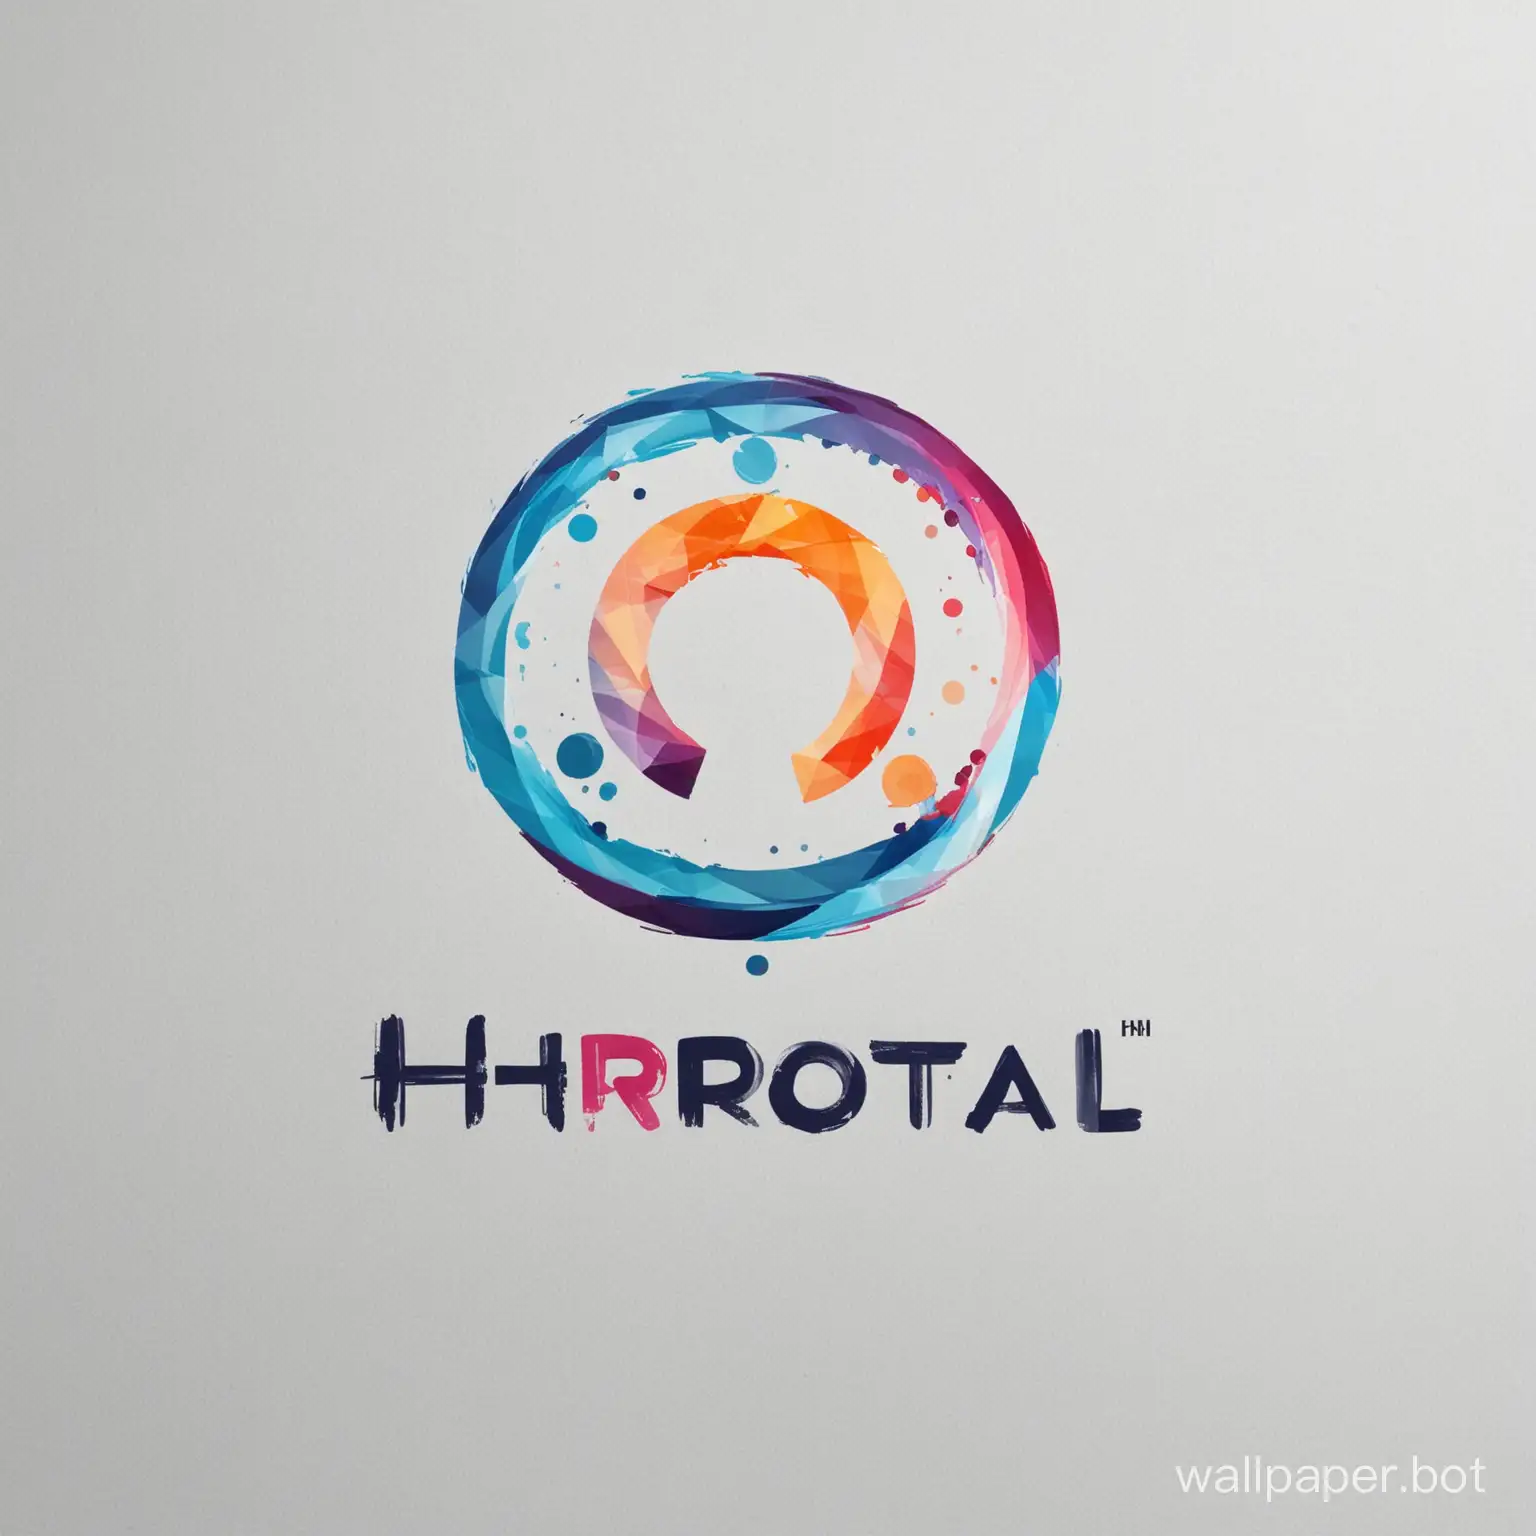 Logo for Hr company "HRPortal"